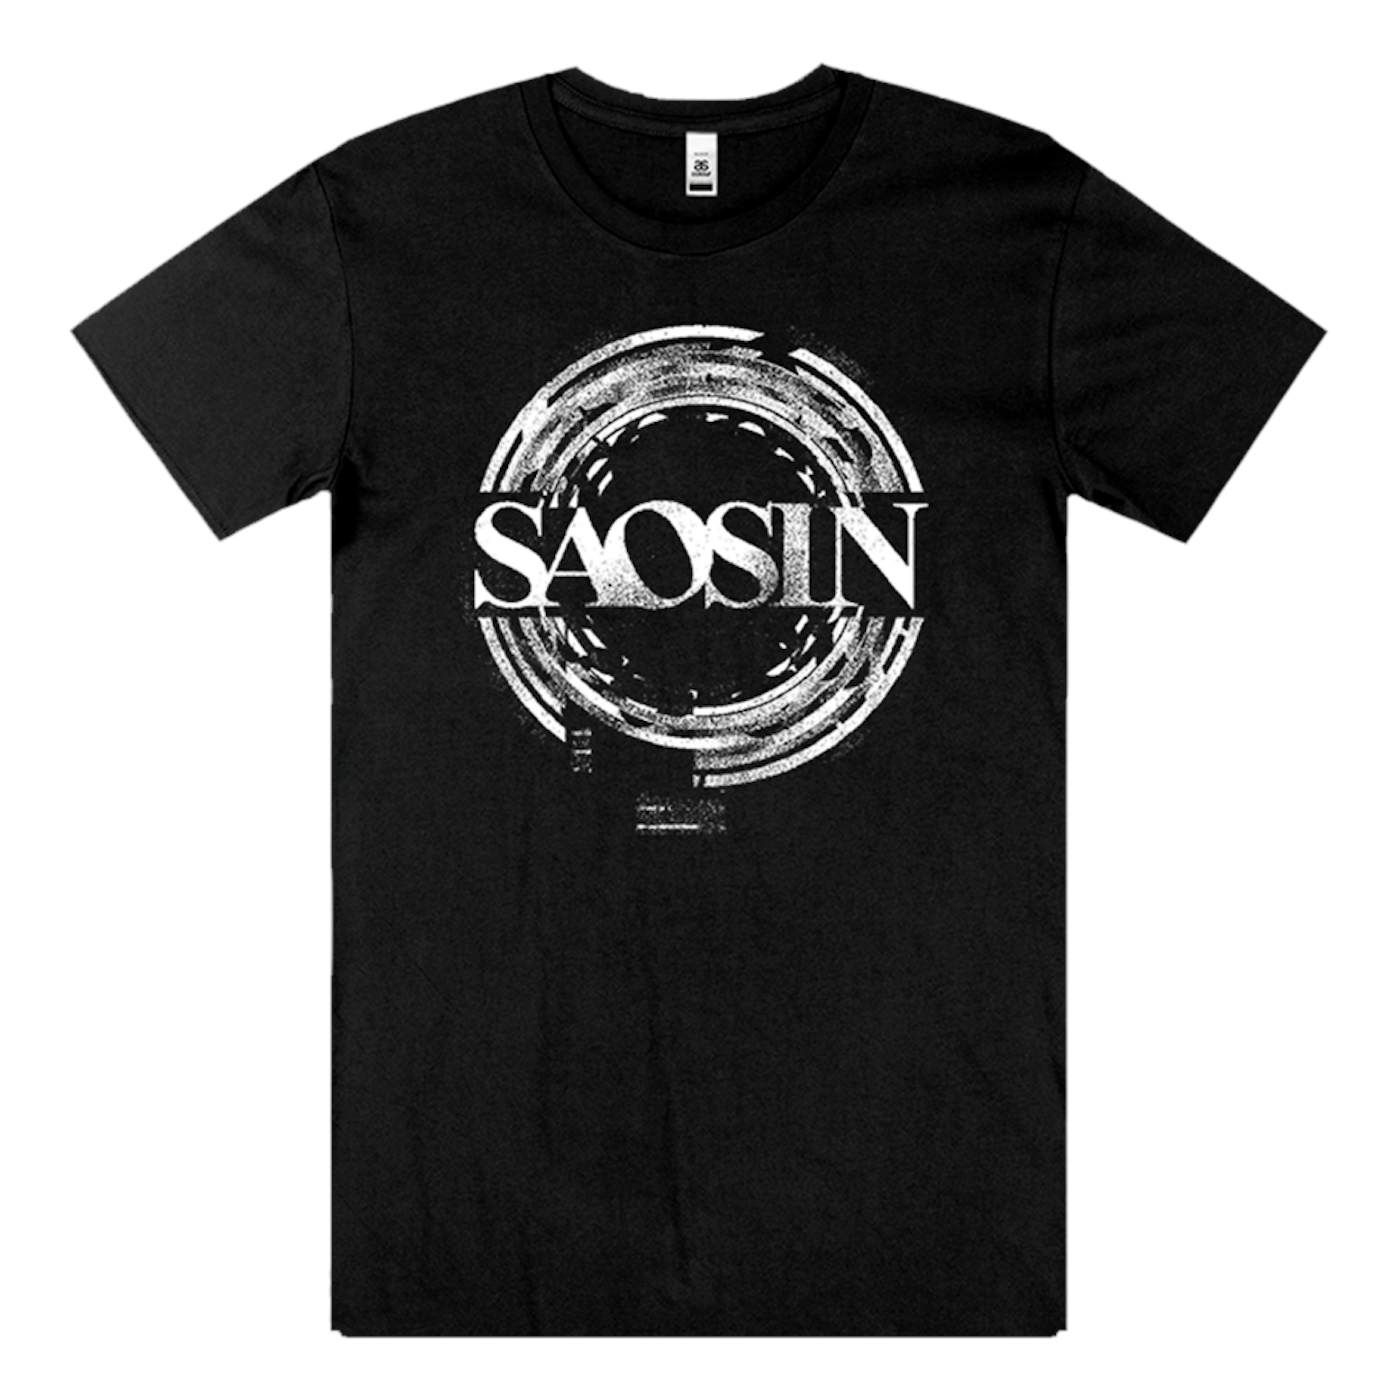 Saosin "Concentric" T-Shirt